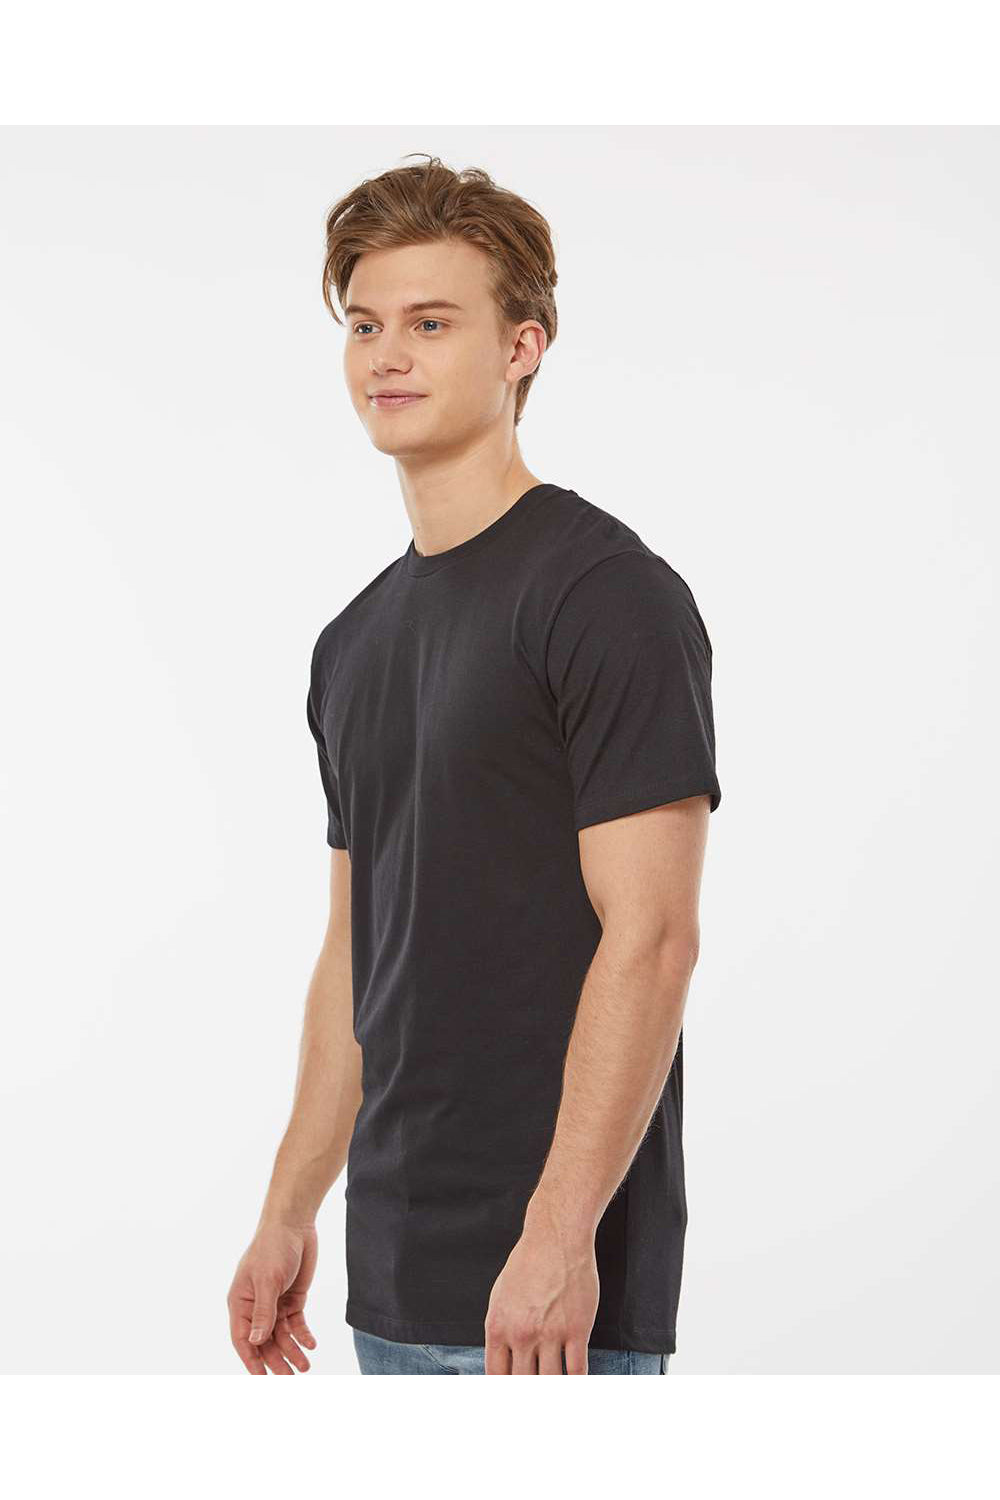 Tultex 541 Mens Premium Short Sleeve Crewneck T-Shirt Black Model Side